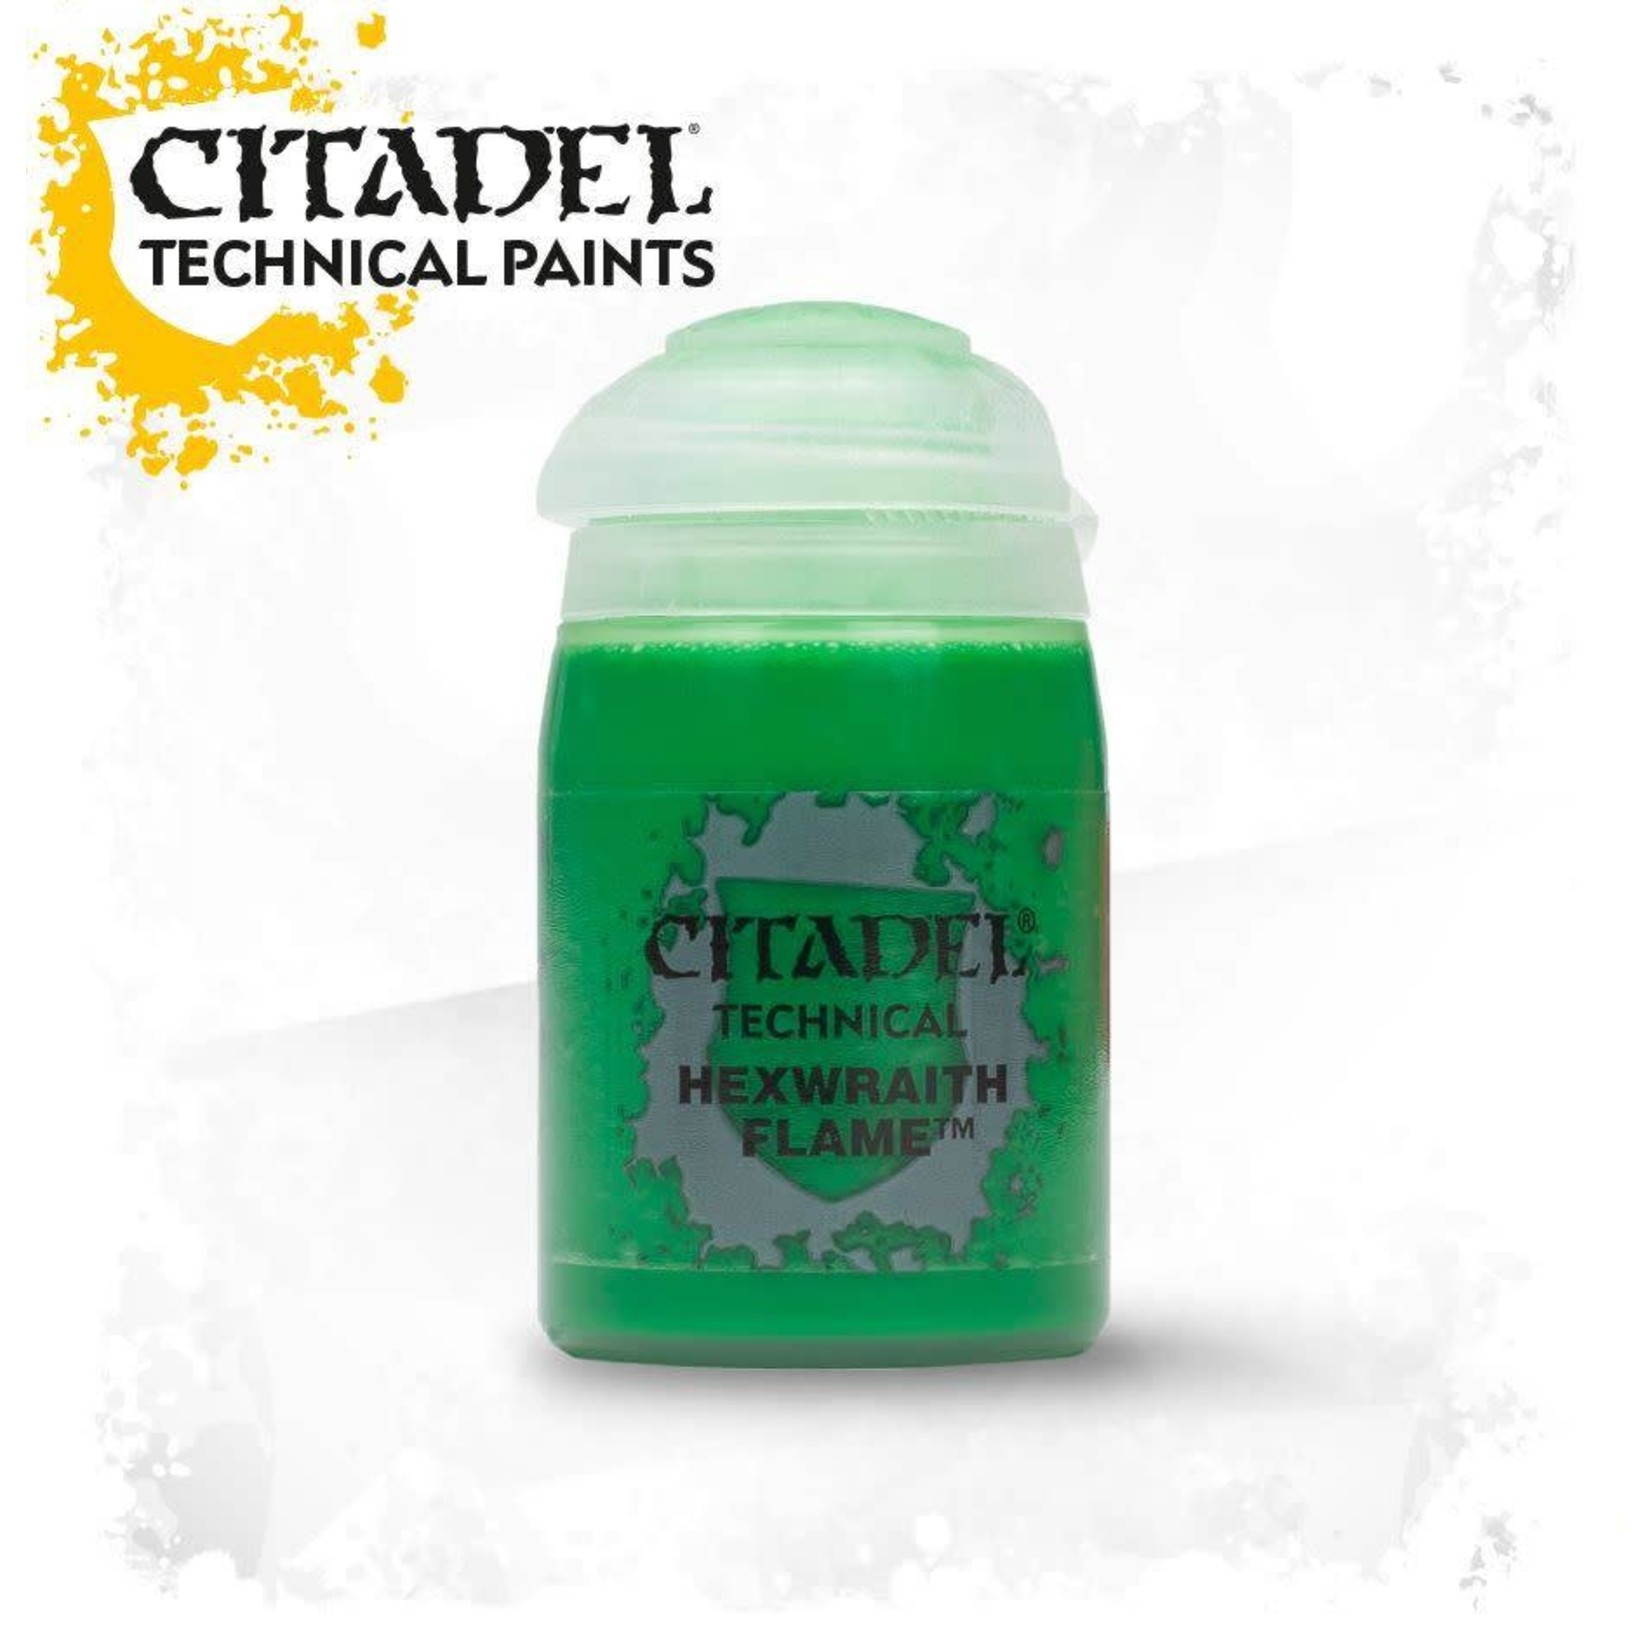 Citadel Technical Paint - Hexwraith Flame 24ml